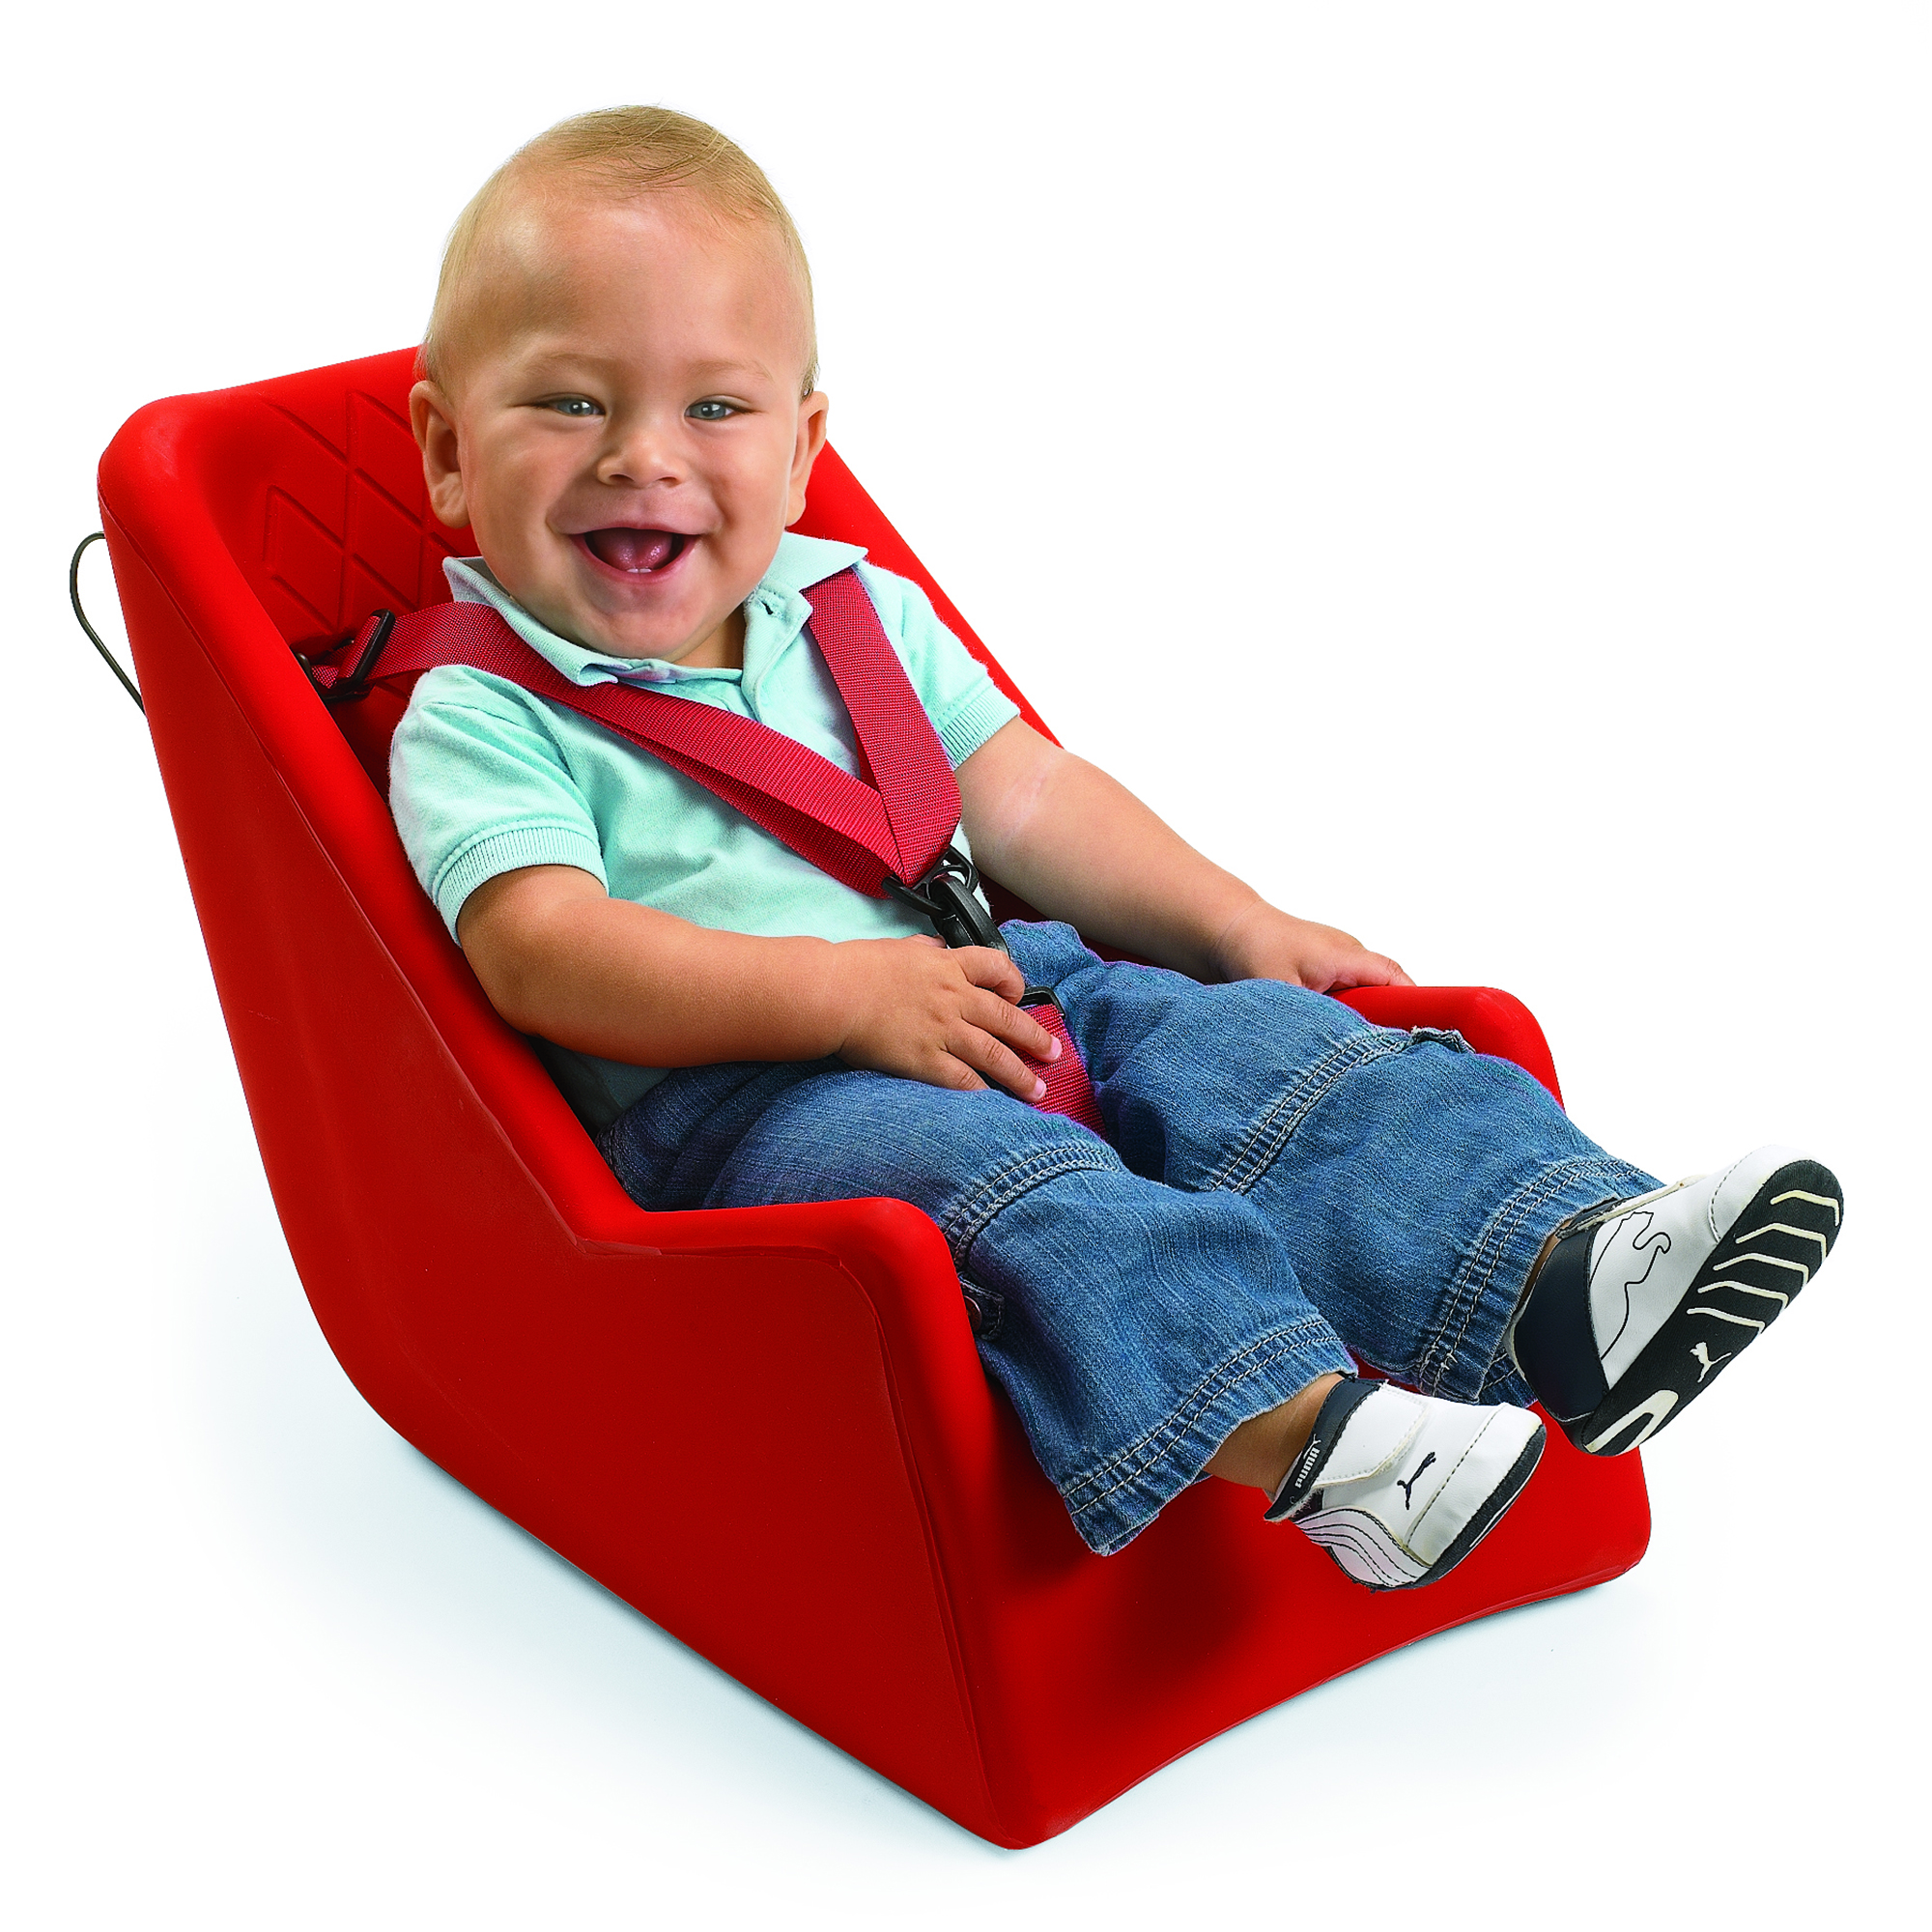 bye bye buggy infant seat